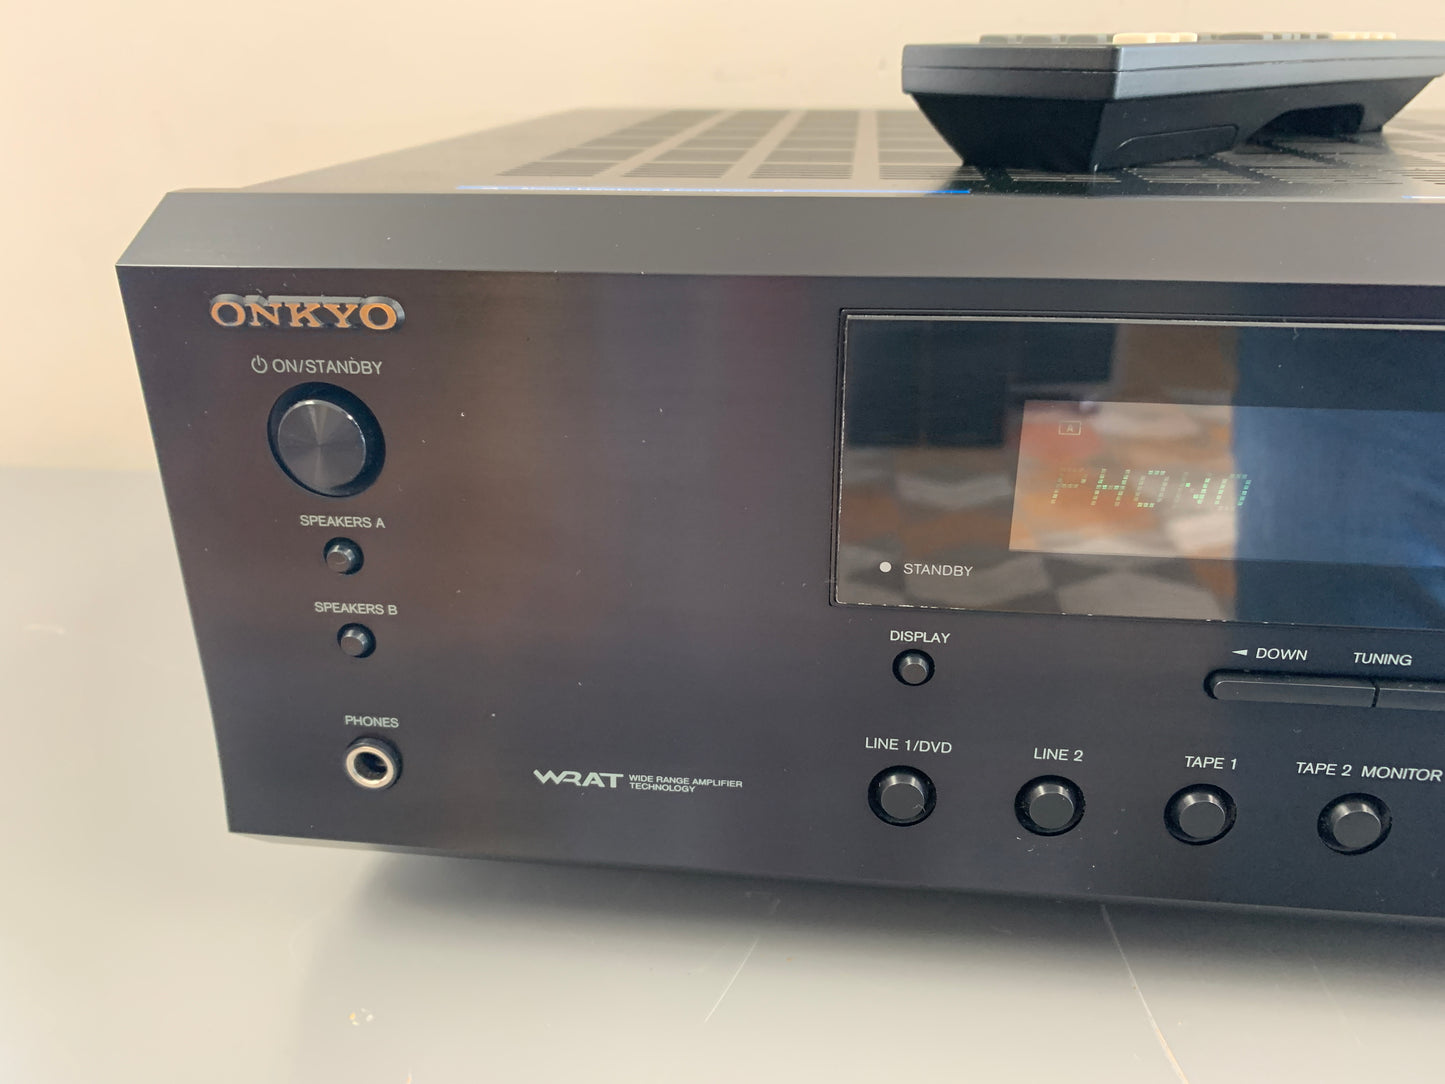 Onkyo TX-8255 Stereo Receiver * Remote Control